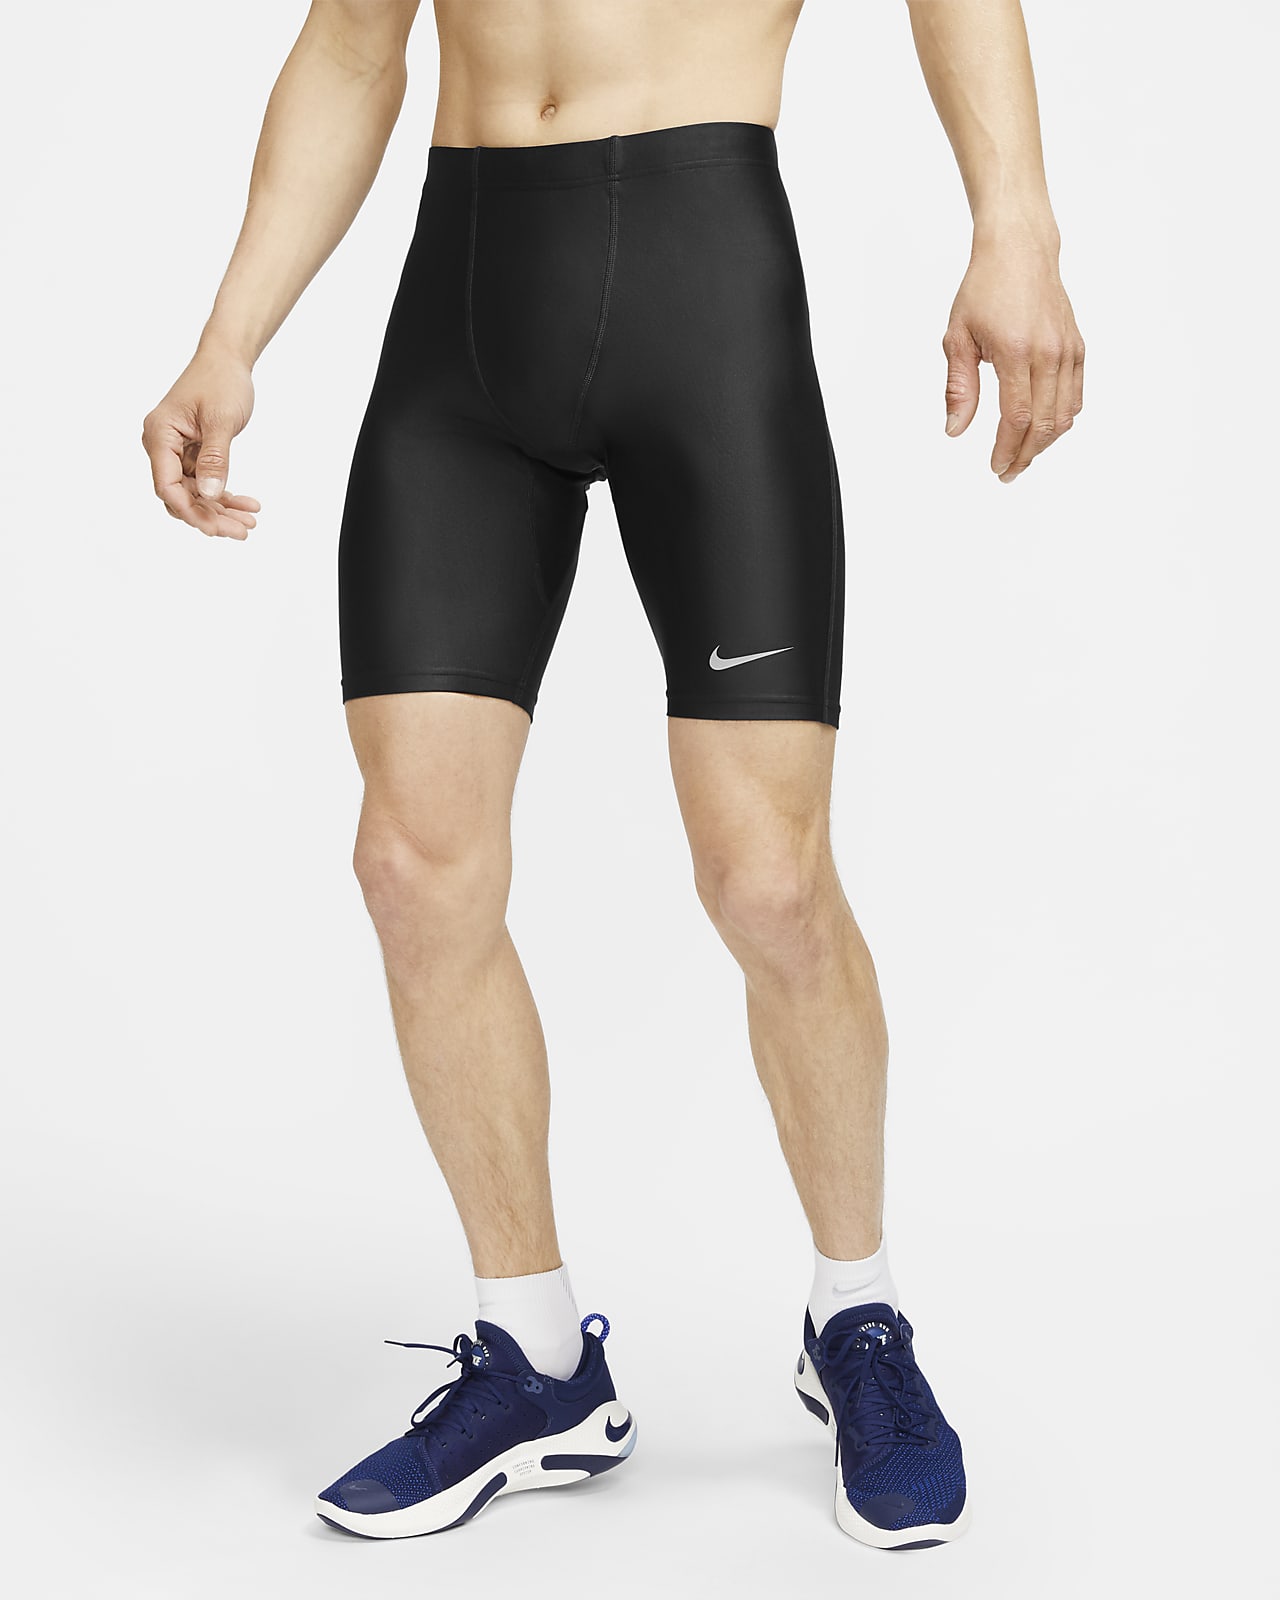 2-Length Running Shorts. Nike SG